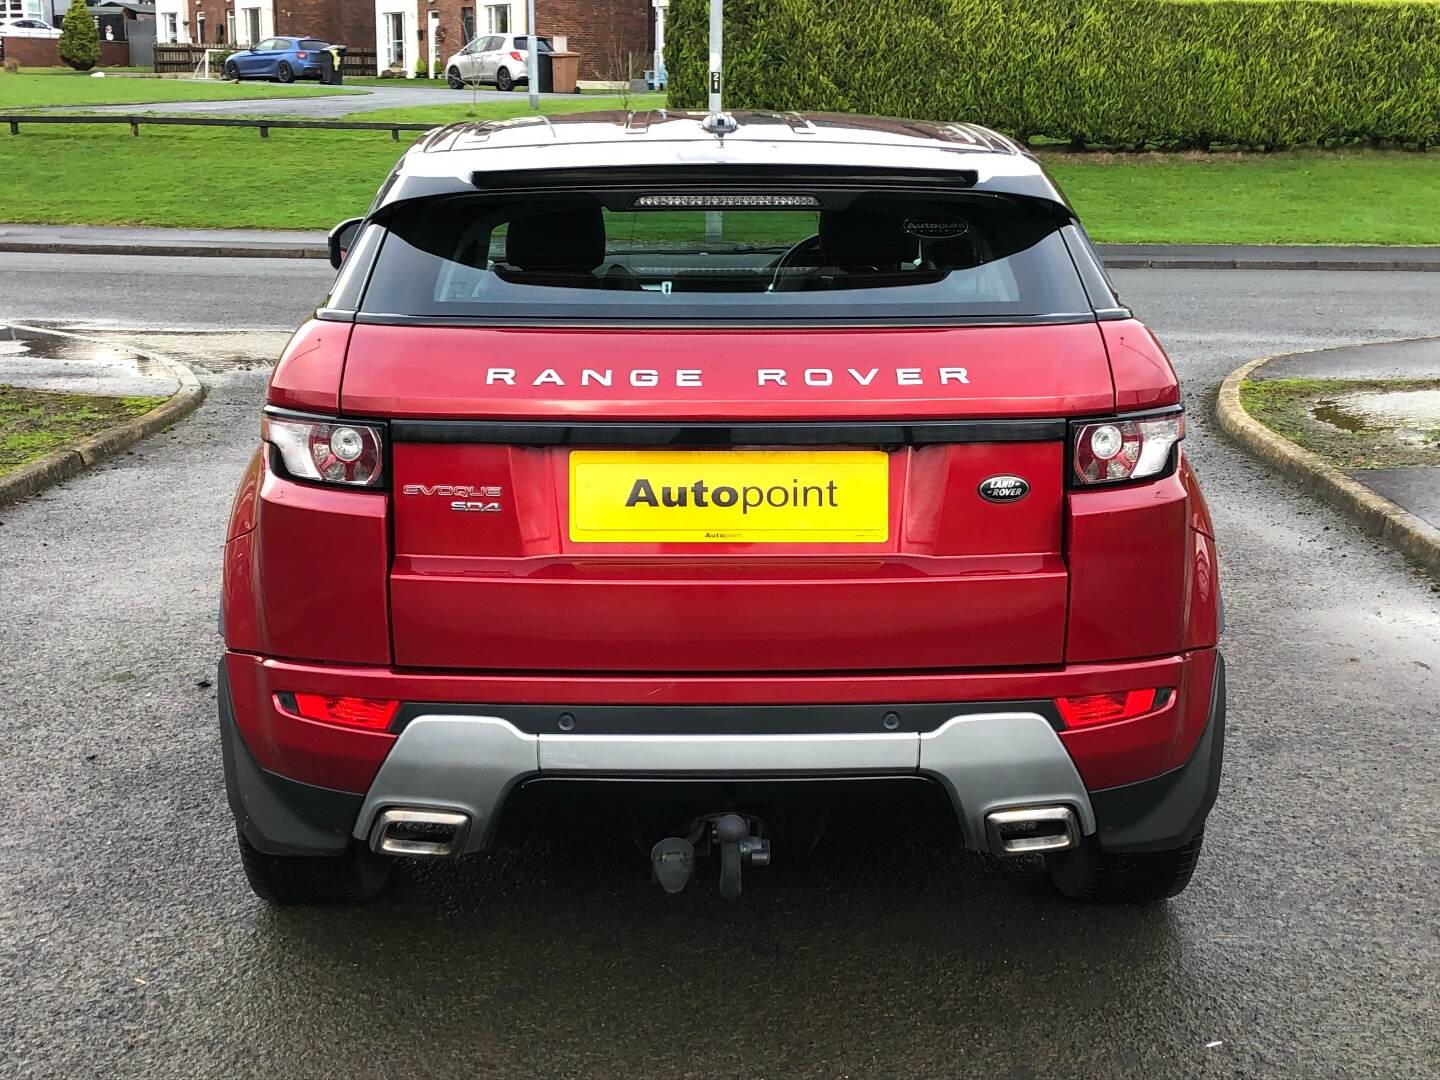 Land Rover Range Rover Evoque DIESEL COUPE in Antrim